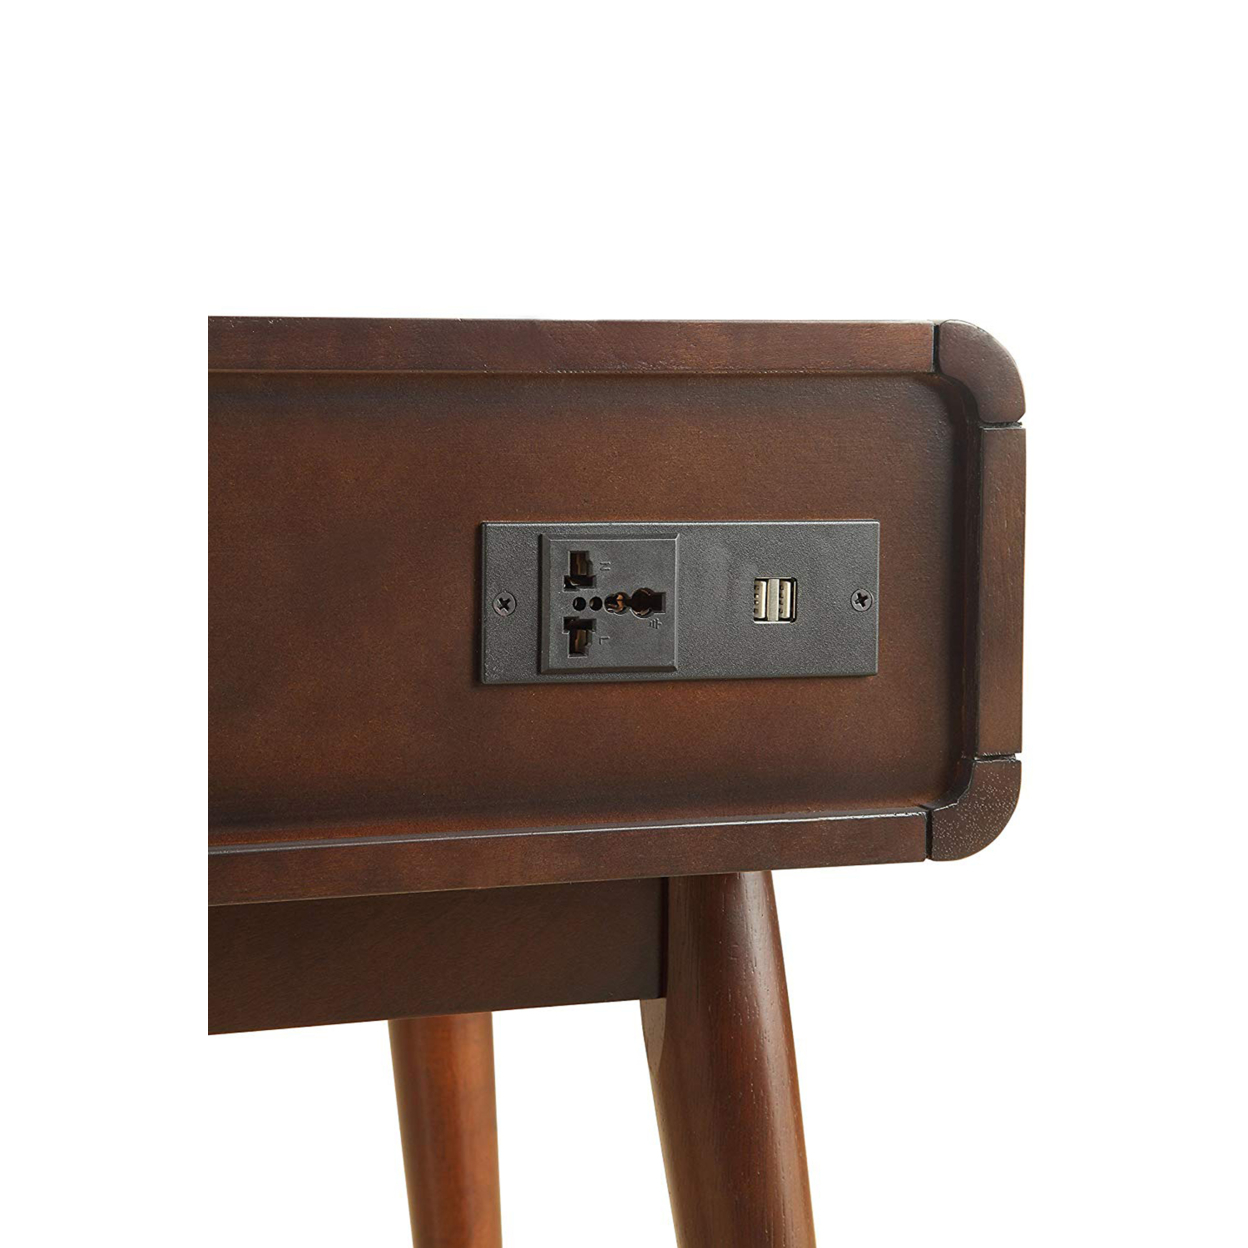 Christa End Table (USB Power Dock), Espresso and White- Saltoro Sherpi - image 4 of 6